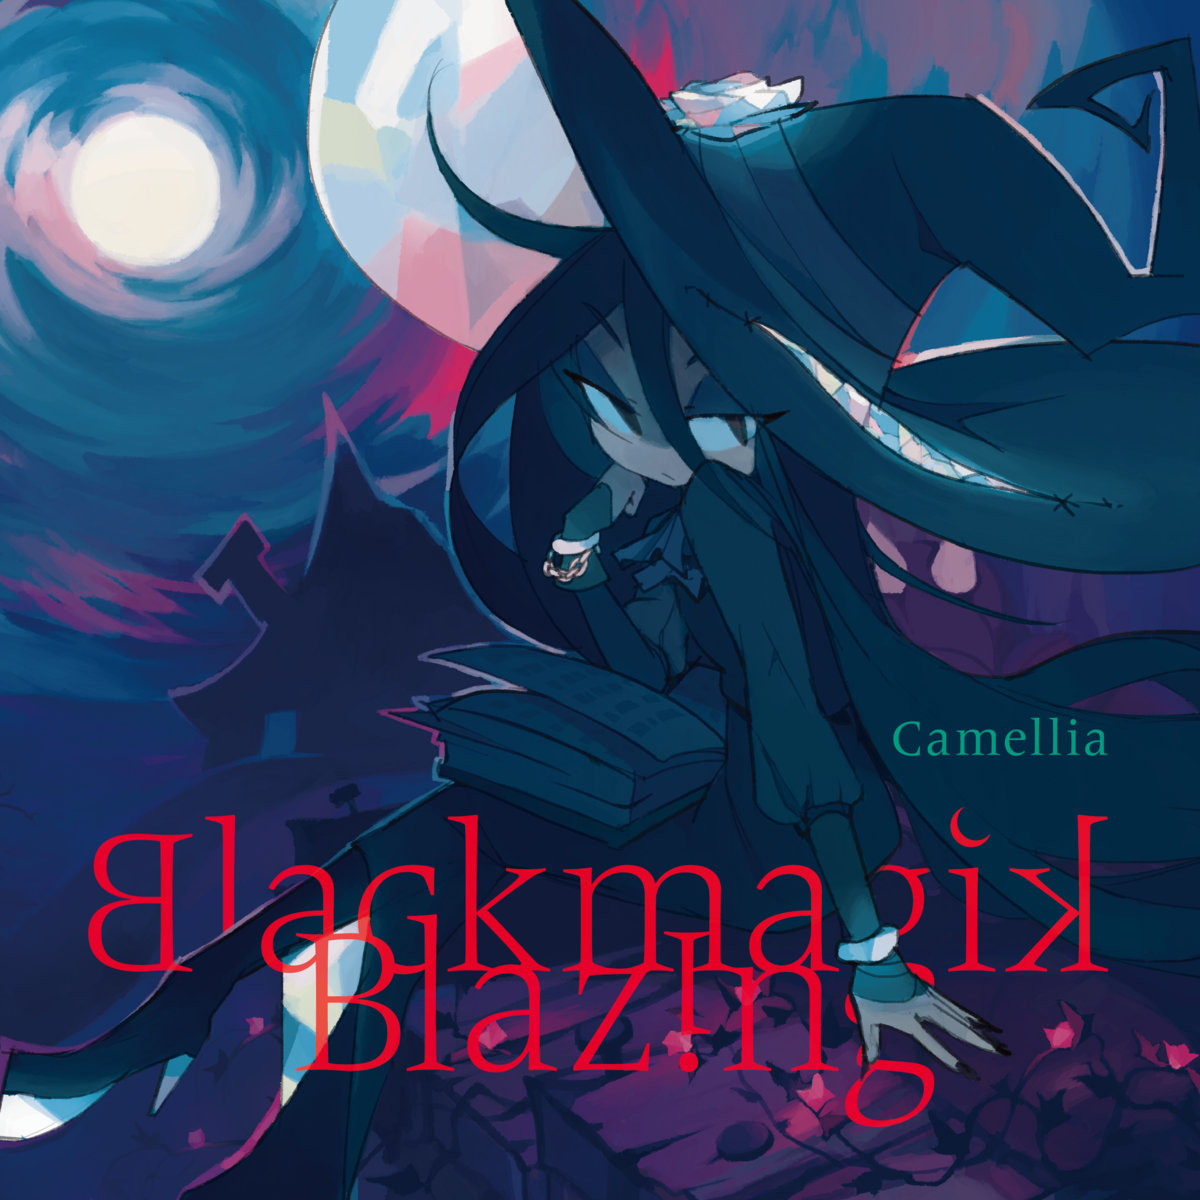 Camellia - [BLEED BLOOD]